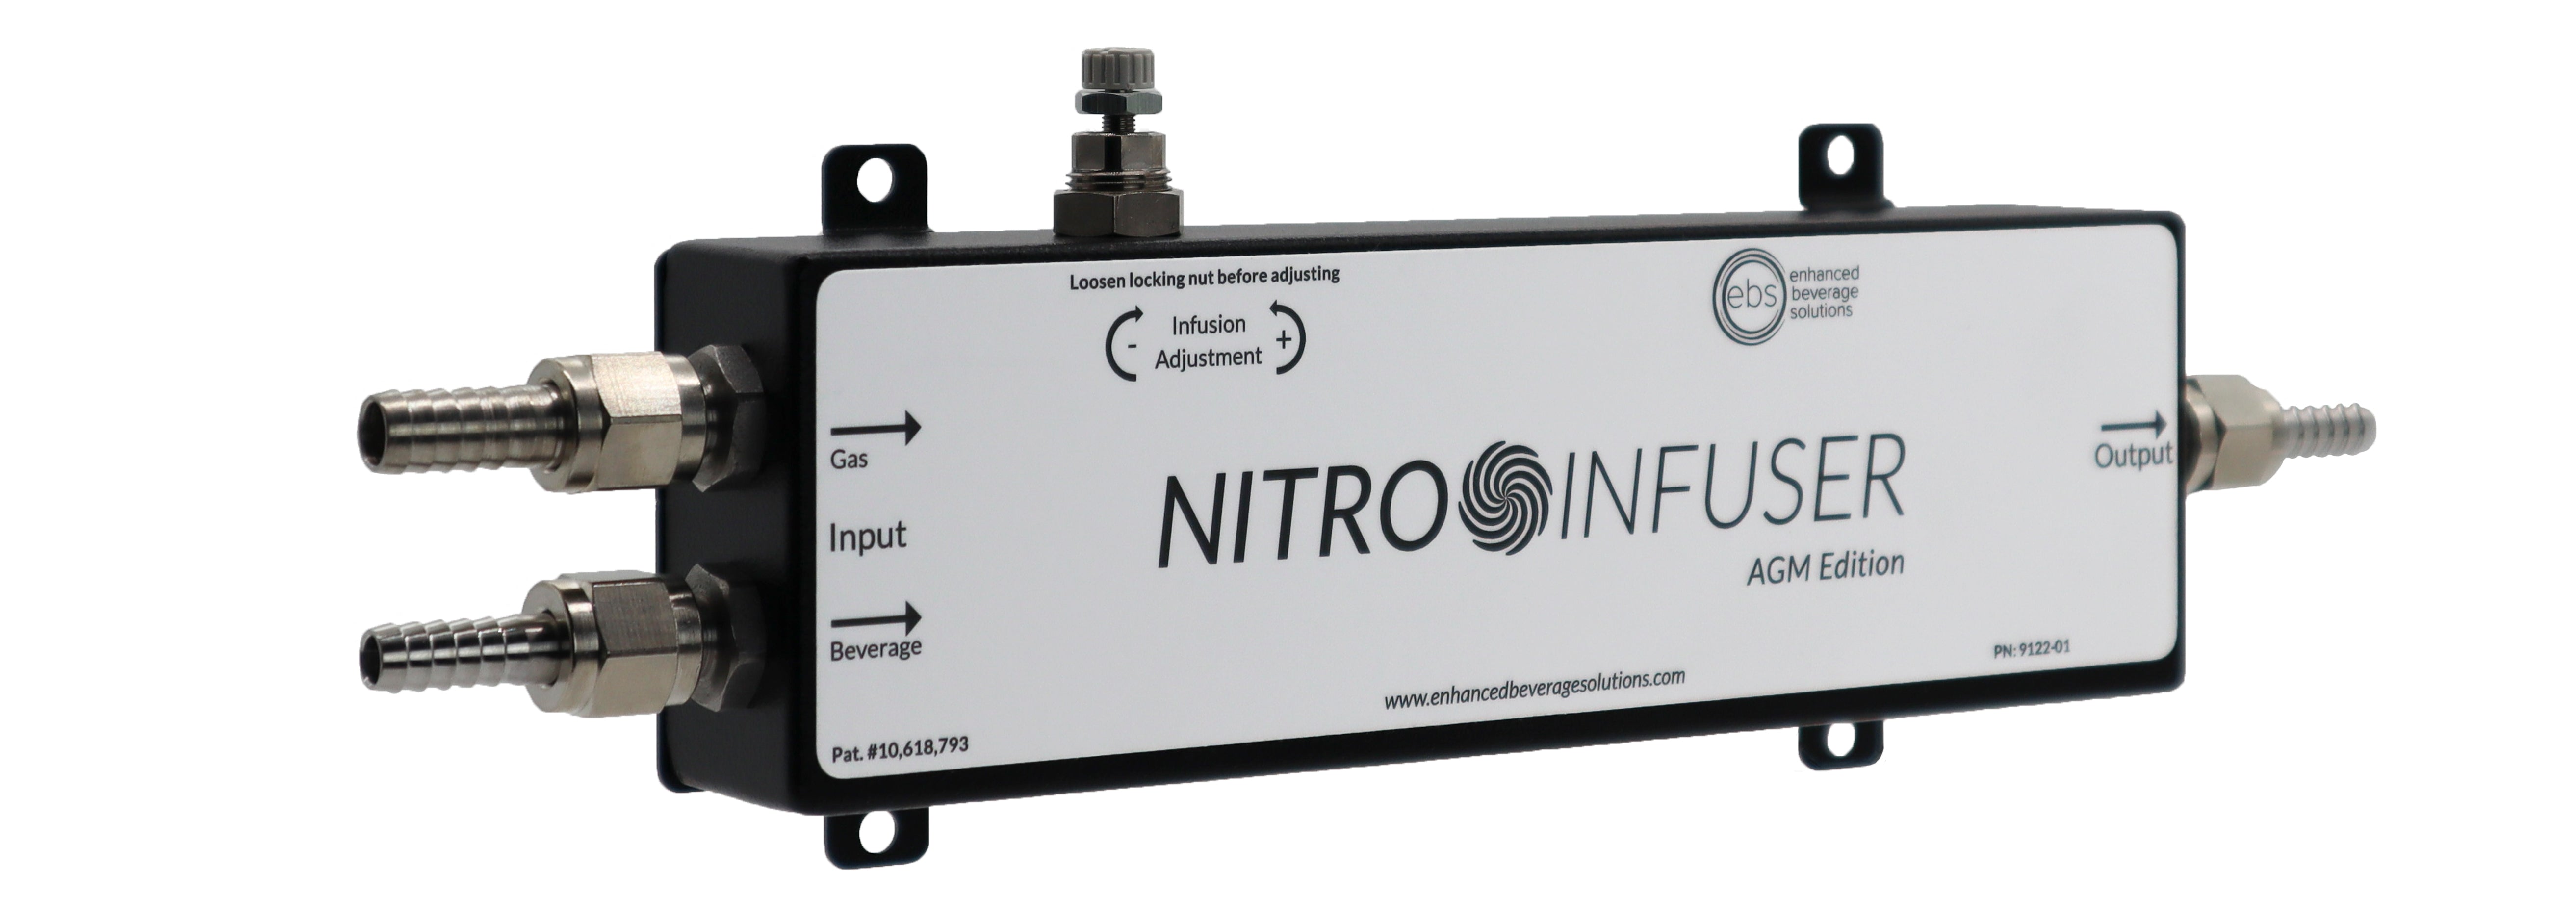 inline nitrogen infuser